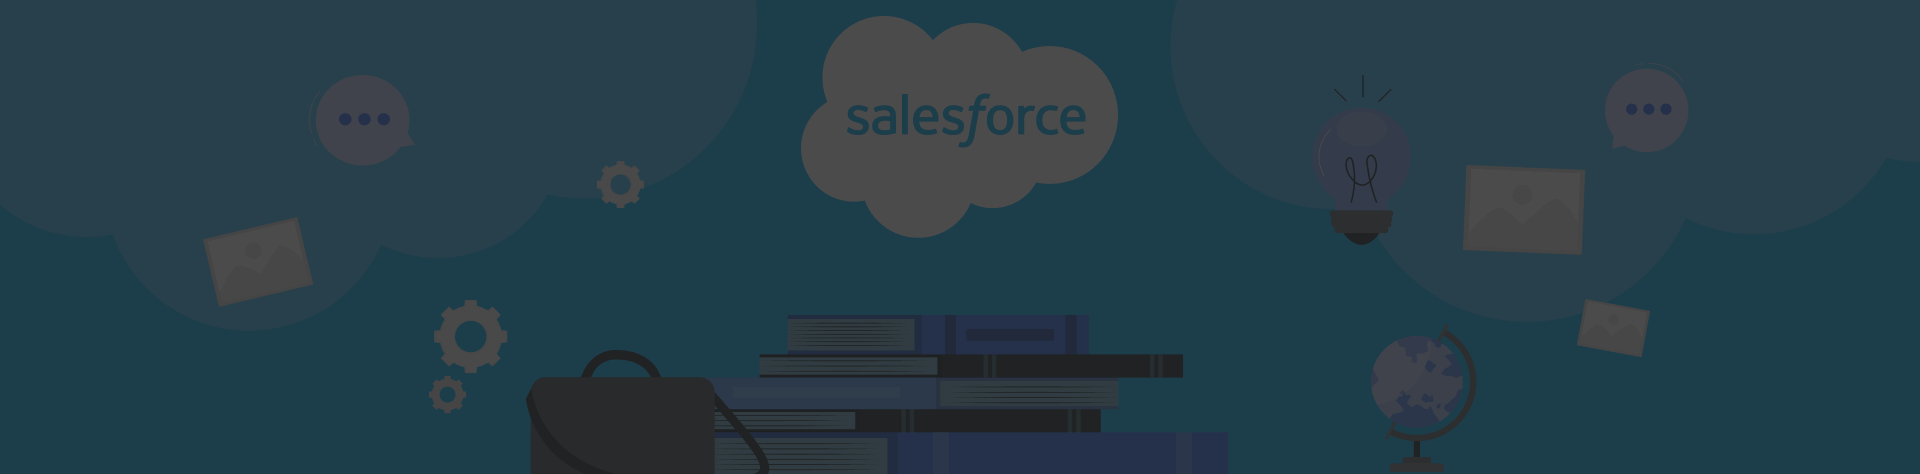 salesforce image